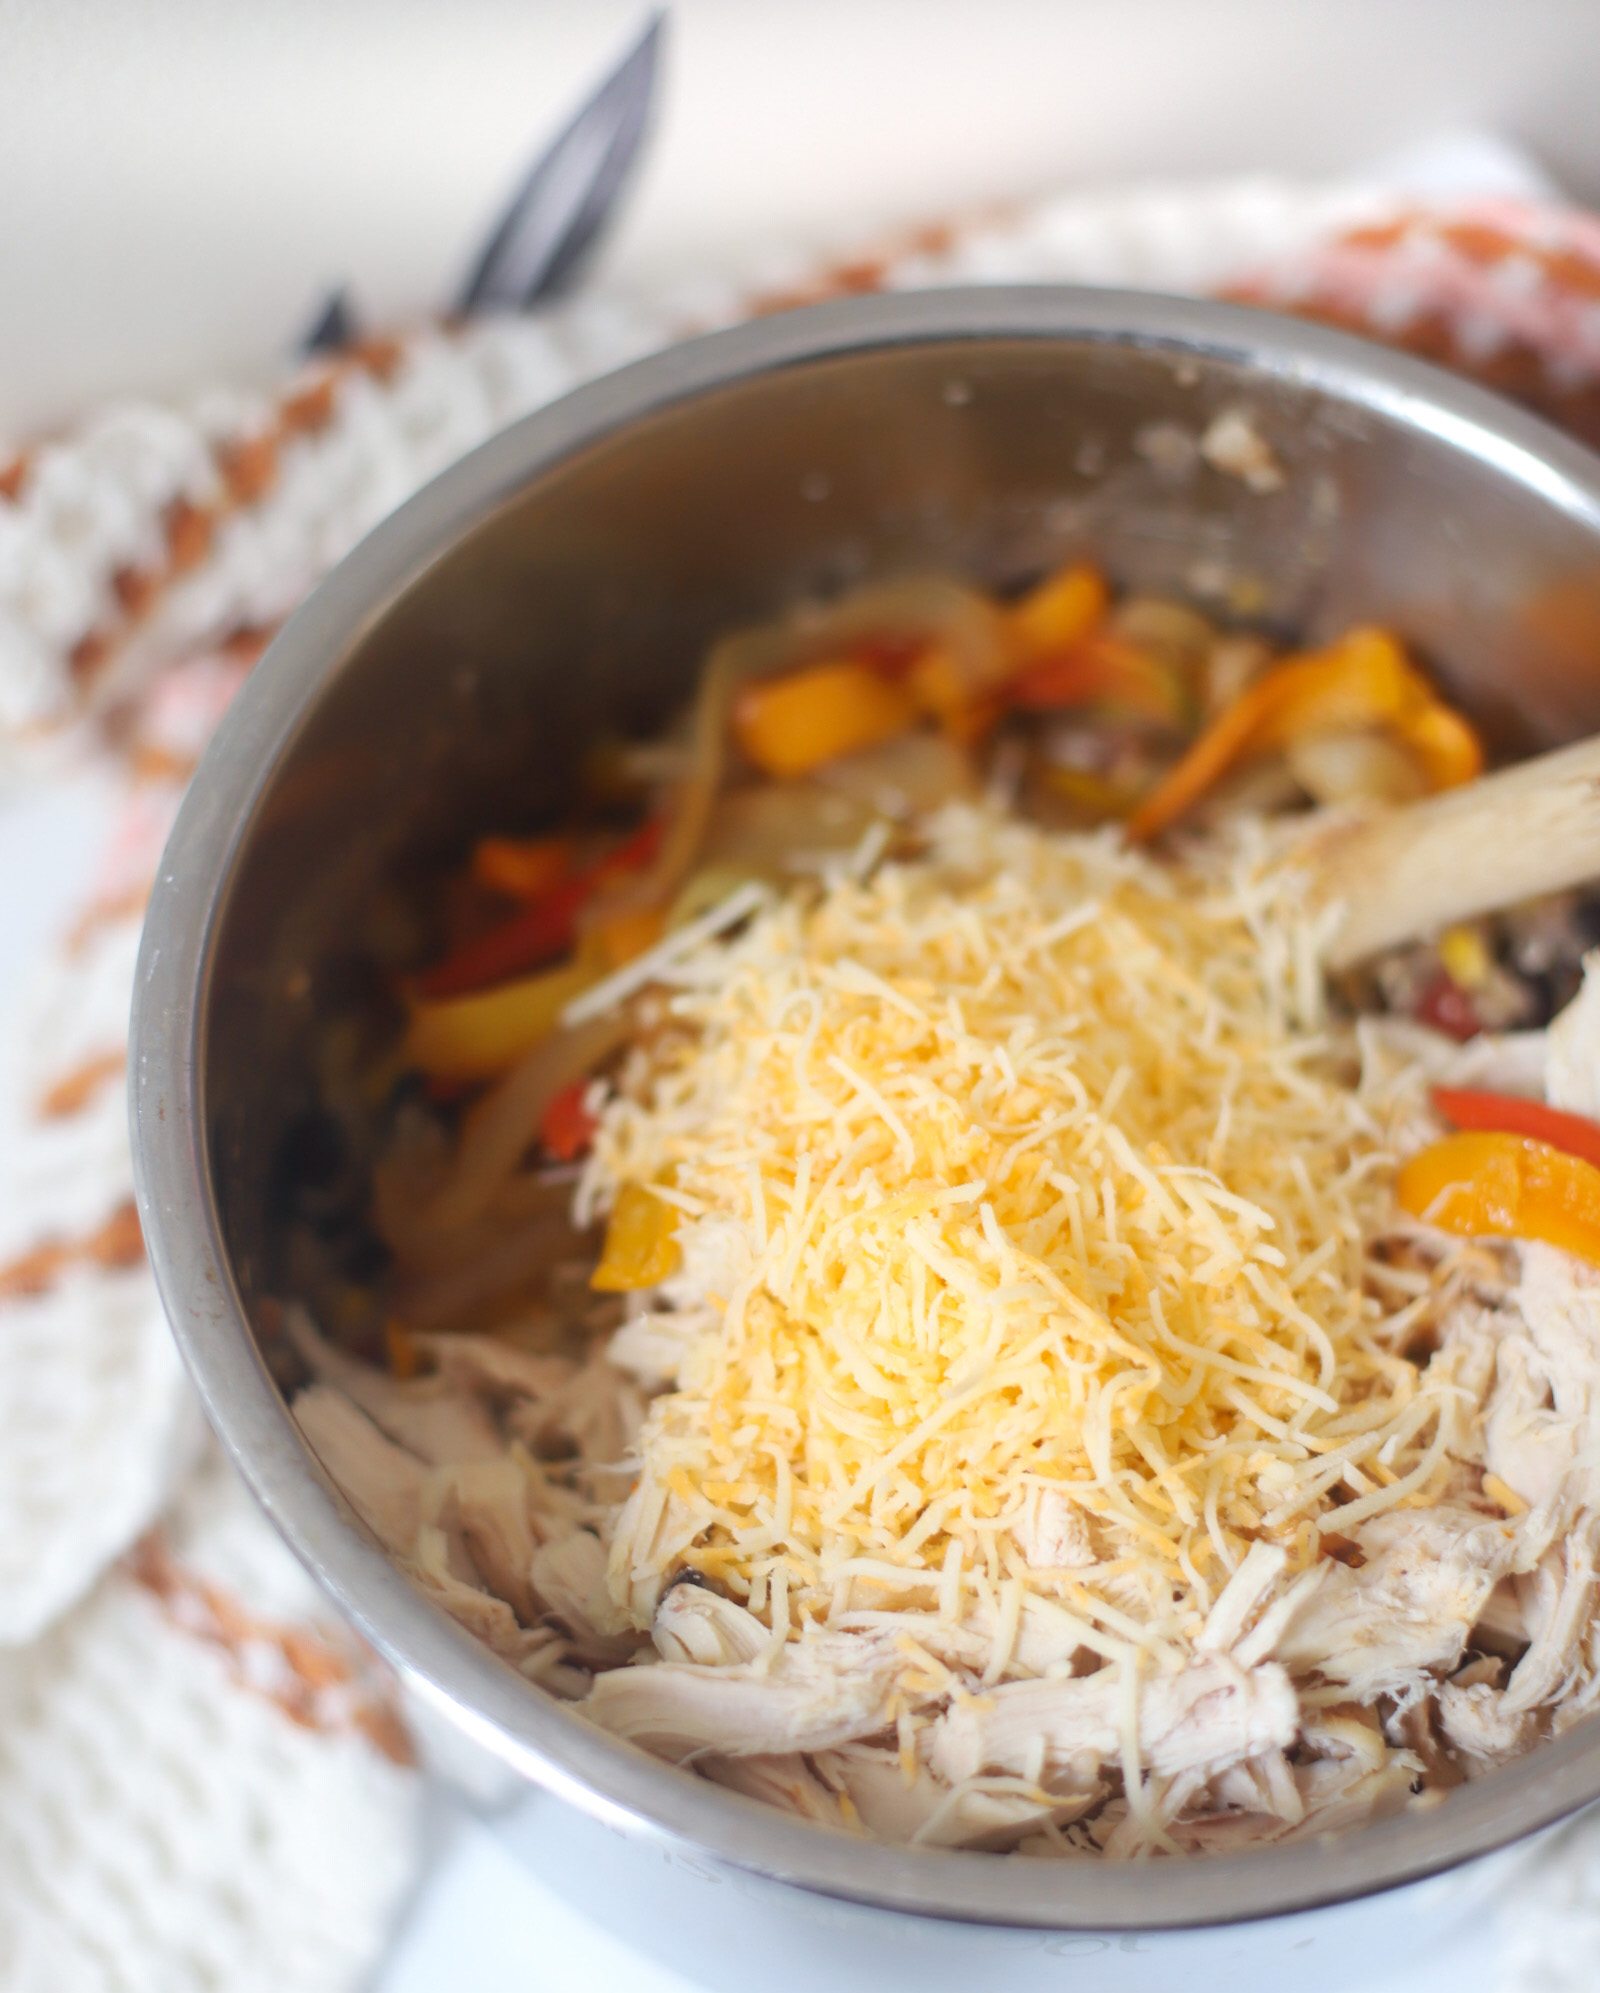 Instant Pot Loaded Chicken Fajita Bowls - Easy Weeknight Dinner Recipe | @glitterinclexi | GLITTERINC.COM